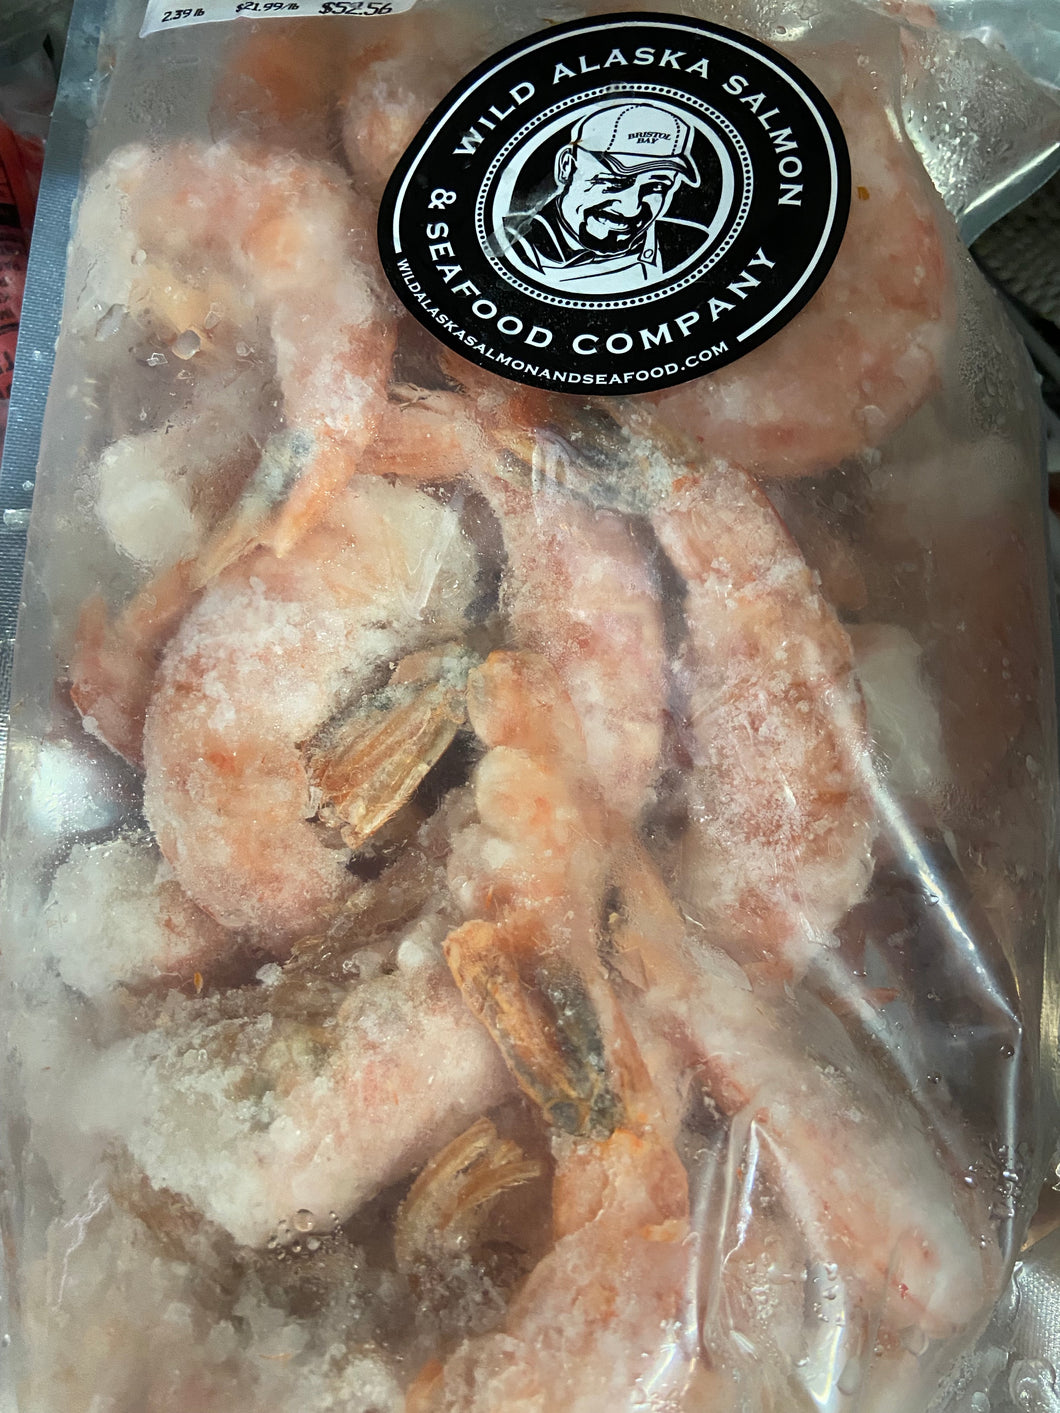 Shrimp, Premium Royal Red, Jumbo, Wild Alaskan Salmon & Seafood Co.